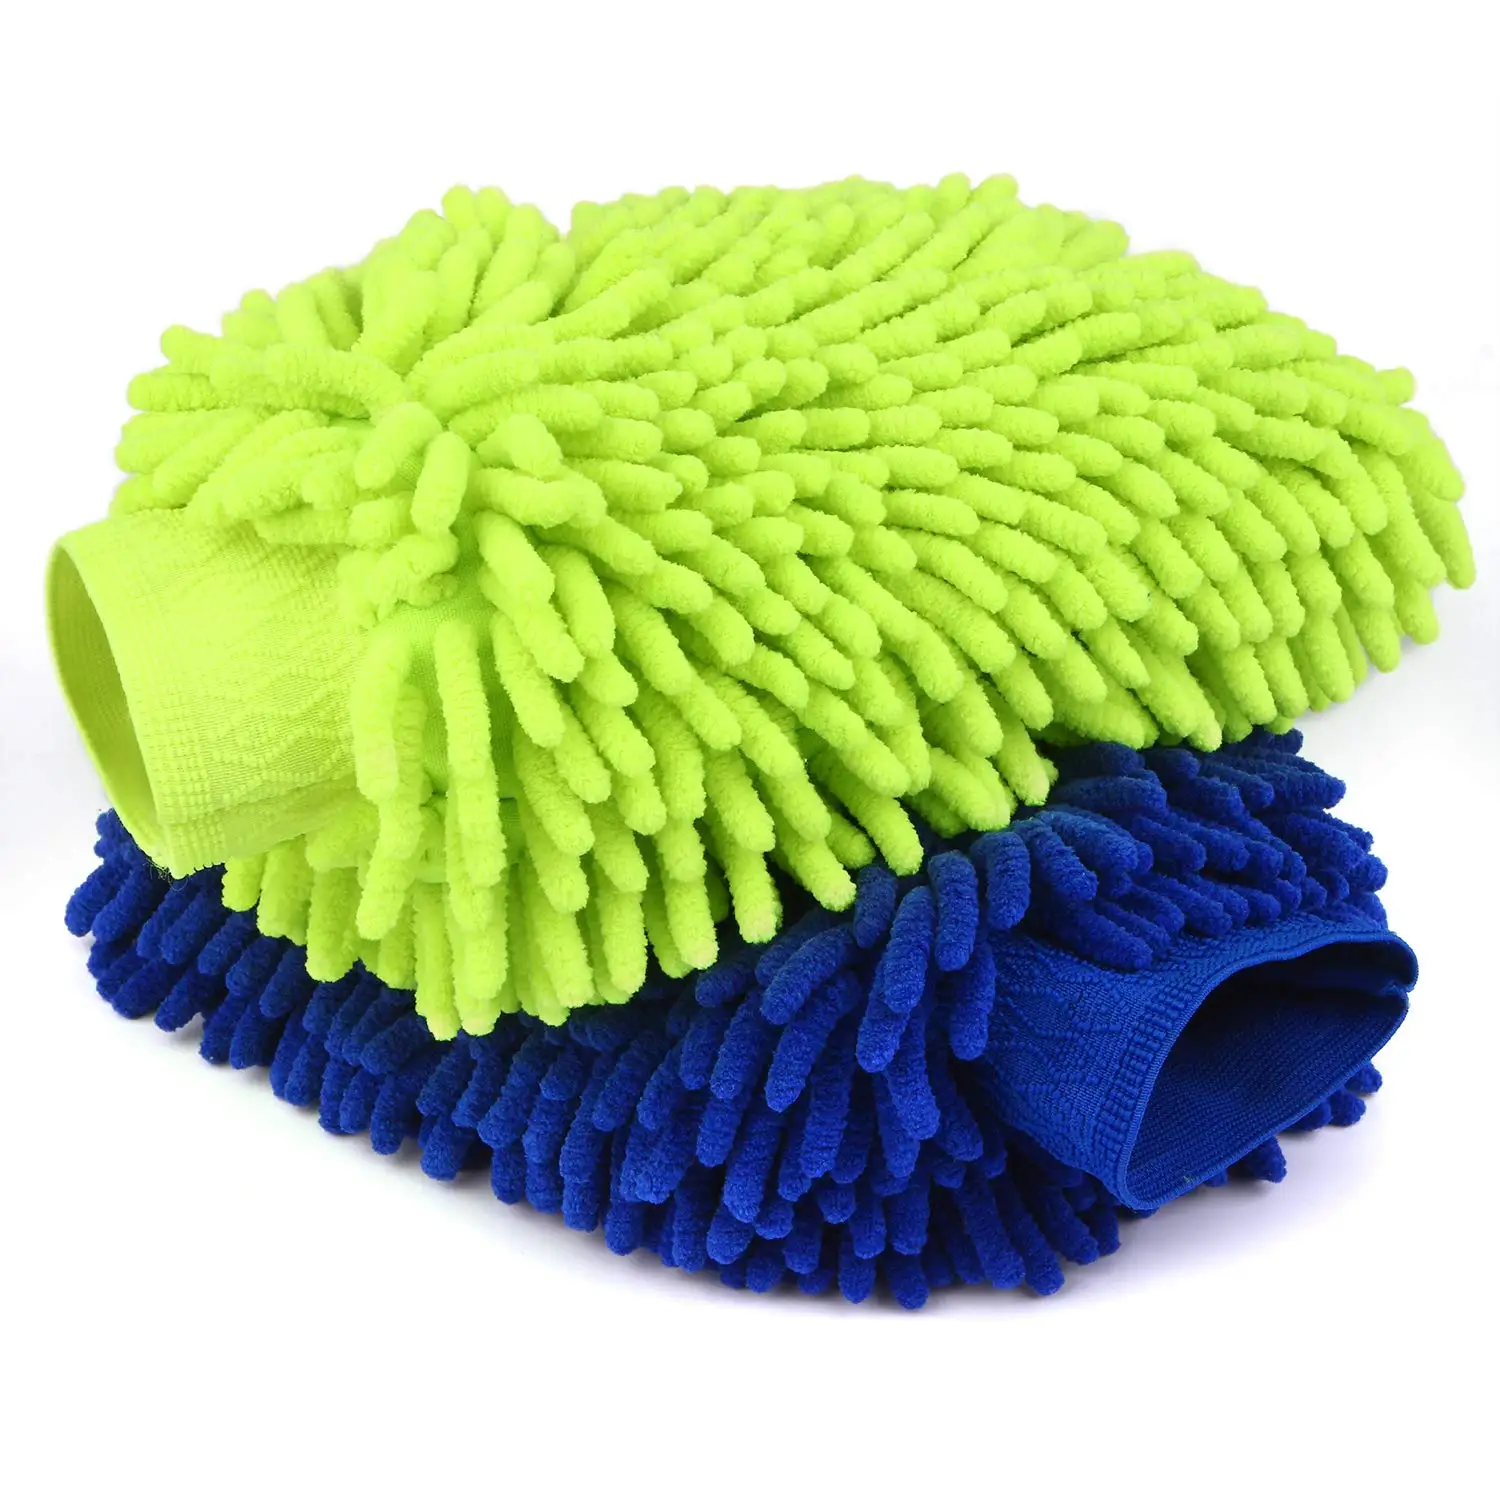 Orange,Green Car Wash Washing Microfiber Chenille mitt Cleaning Glove US Seller 